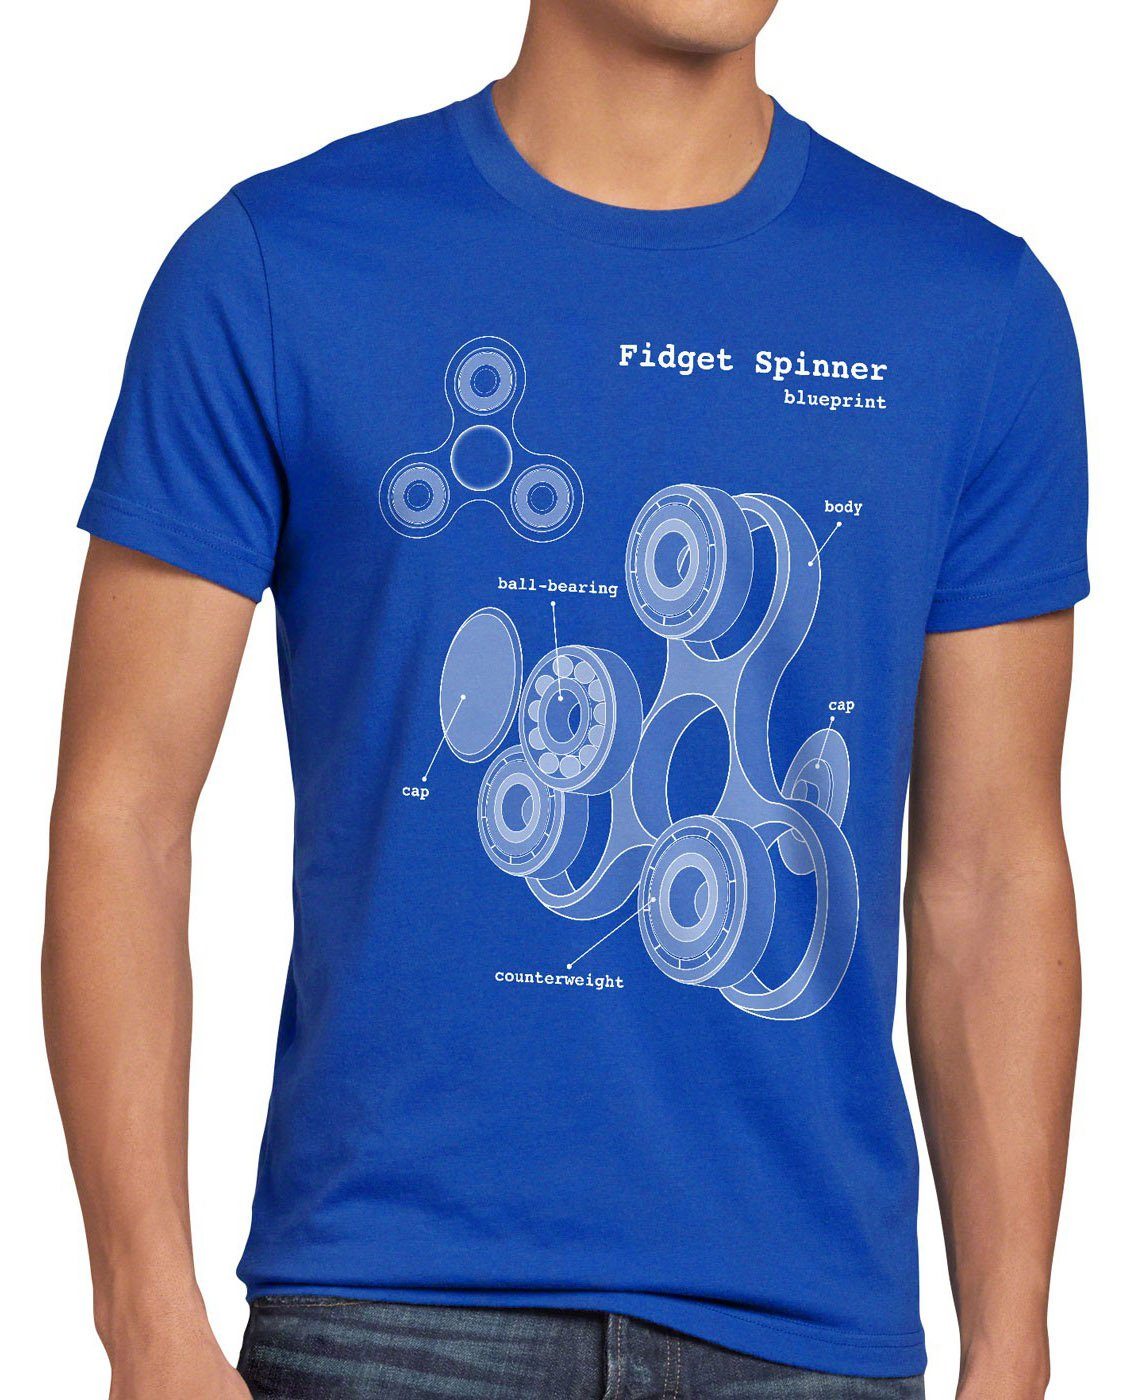 style3 Print-Shirt Blaupause T-Shirt Handspinner Hand Finger Toy Spielzeug Spinner Herren Fidget